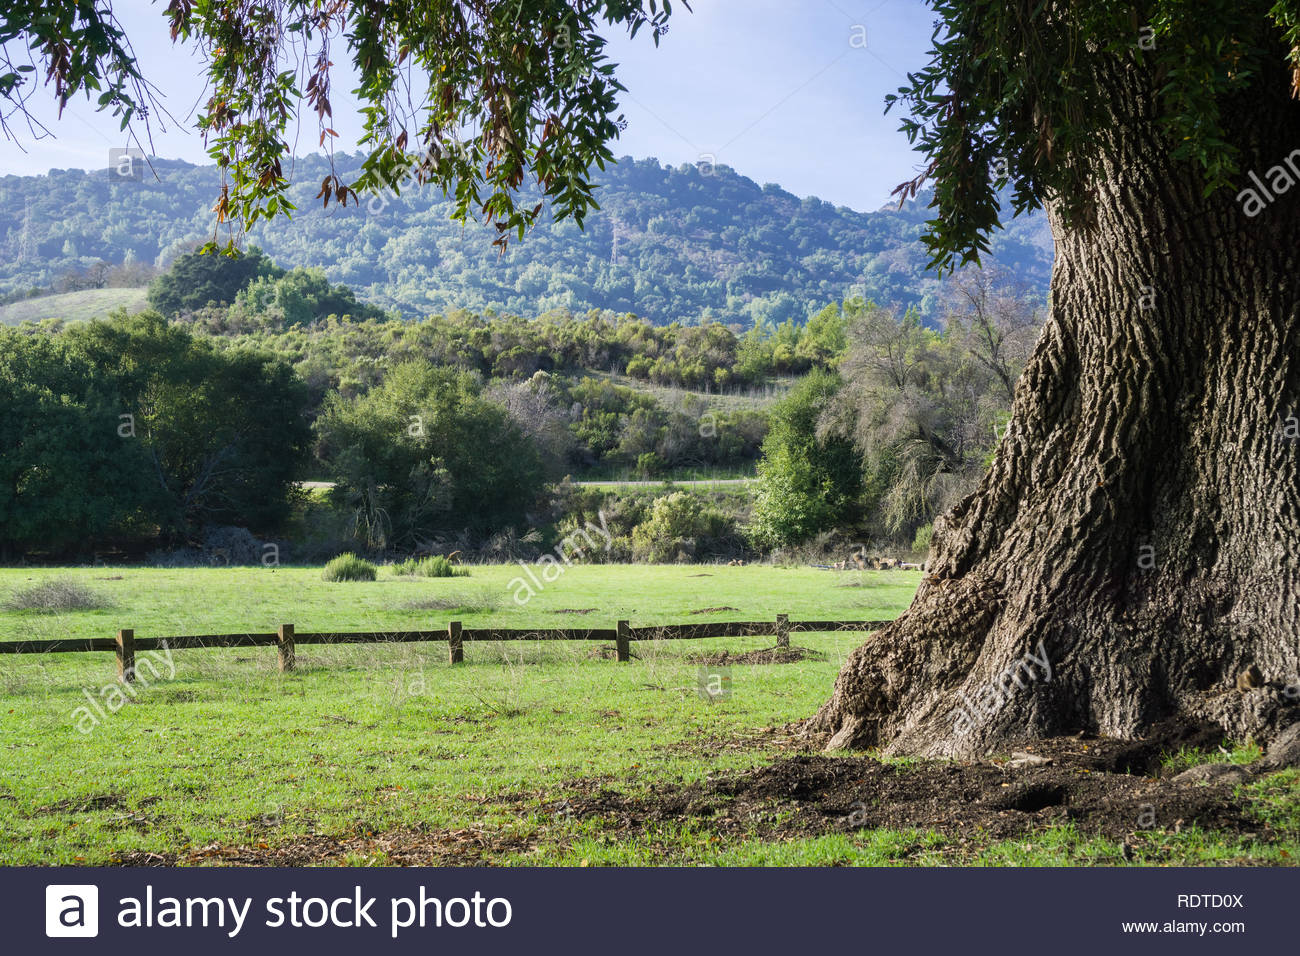 Old California Bay Laurel Tree On A Green Meadow Deer Grazing In